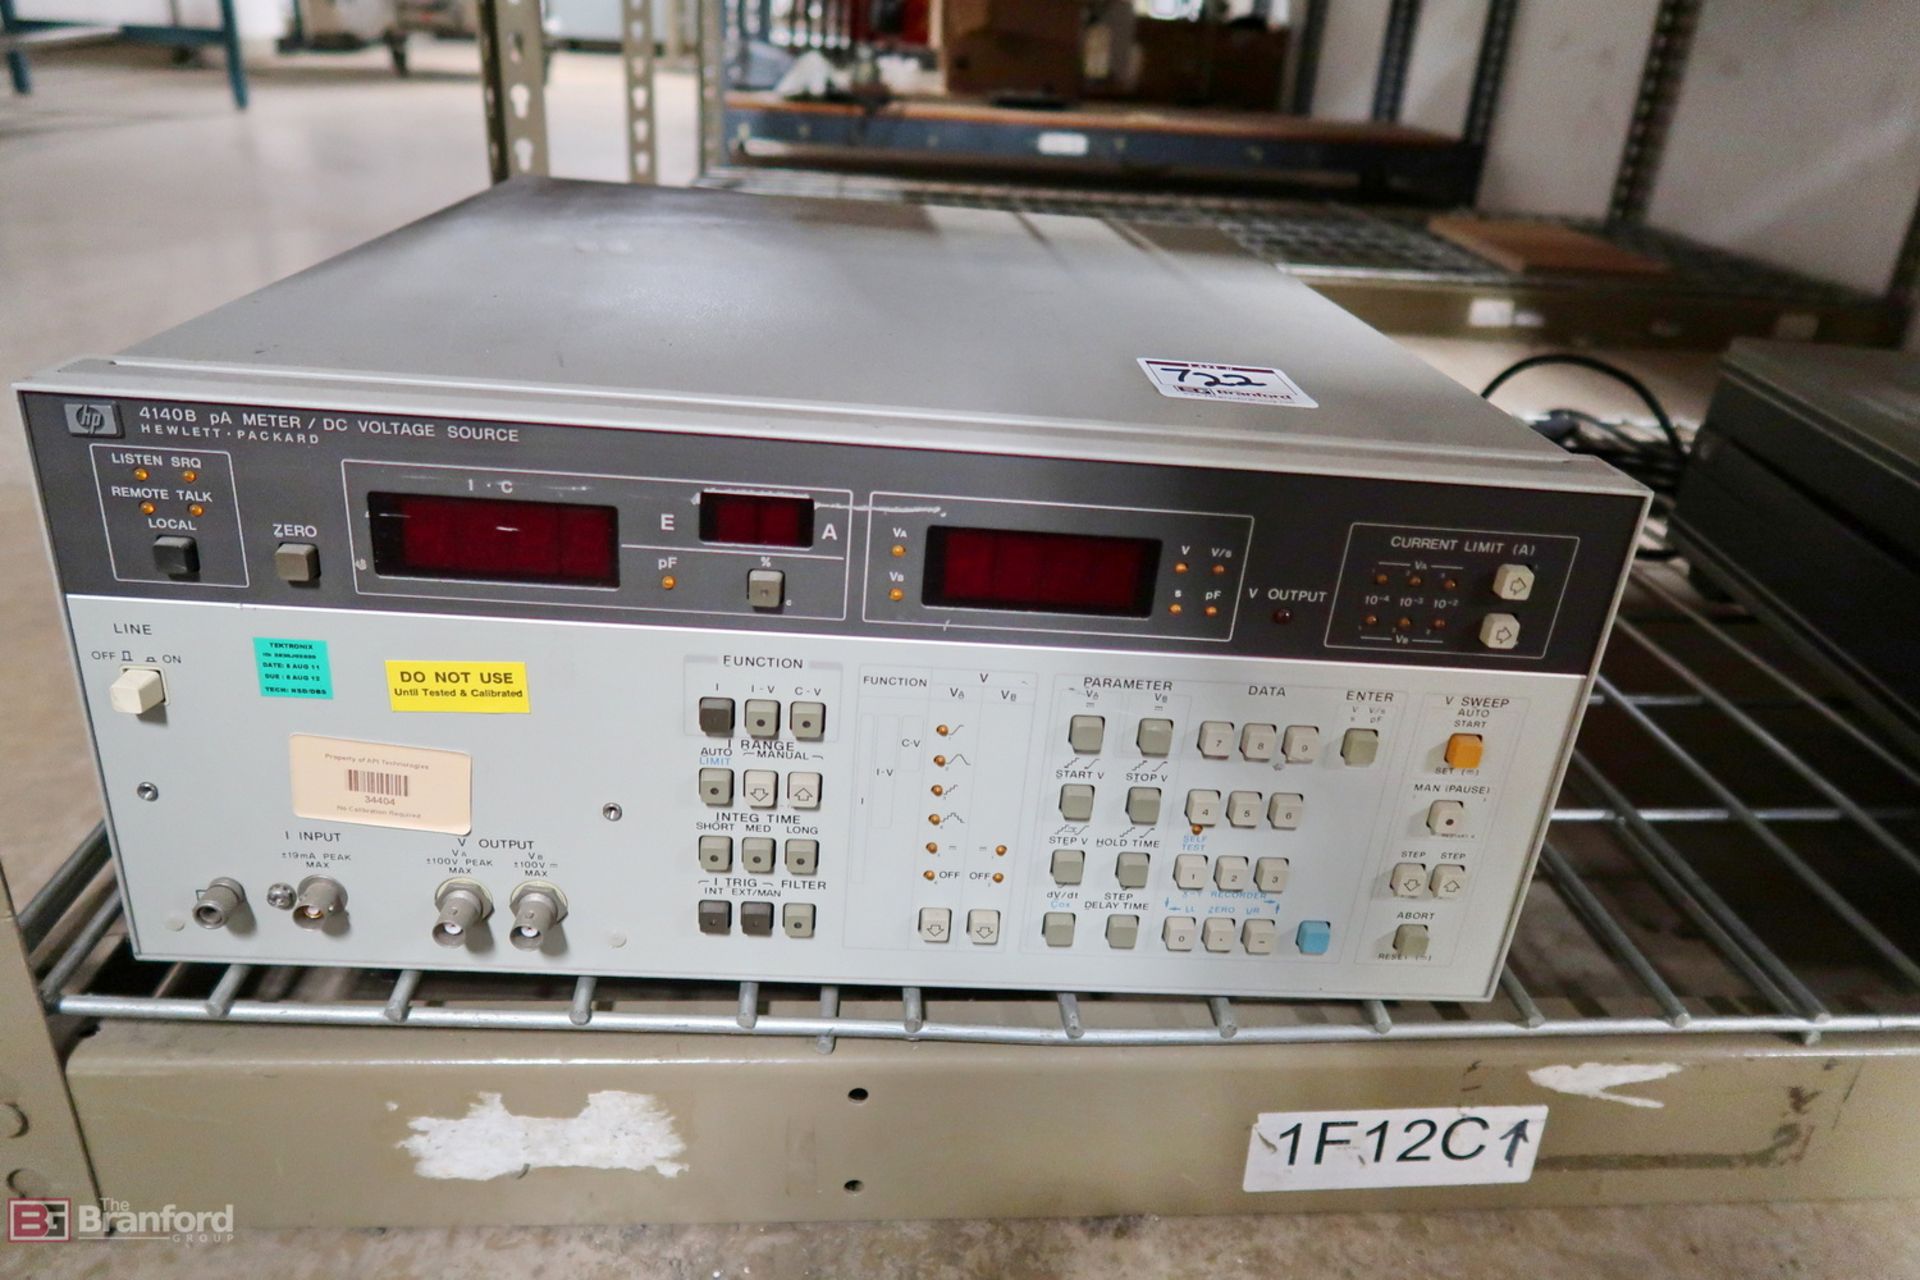 HP 4140B pA meter / DC voltage source